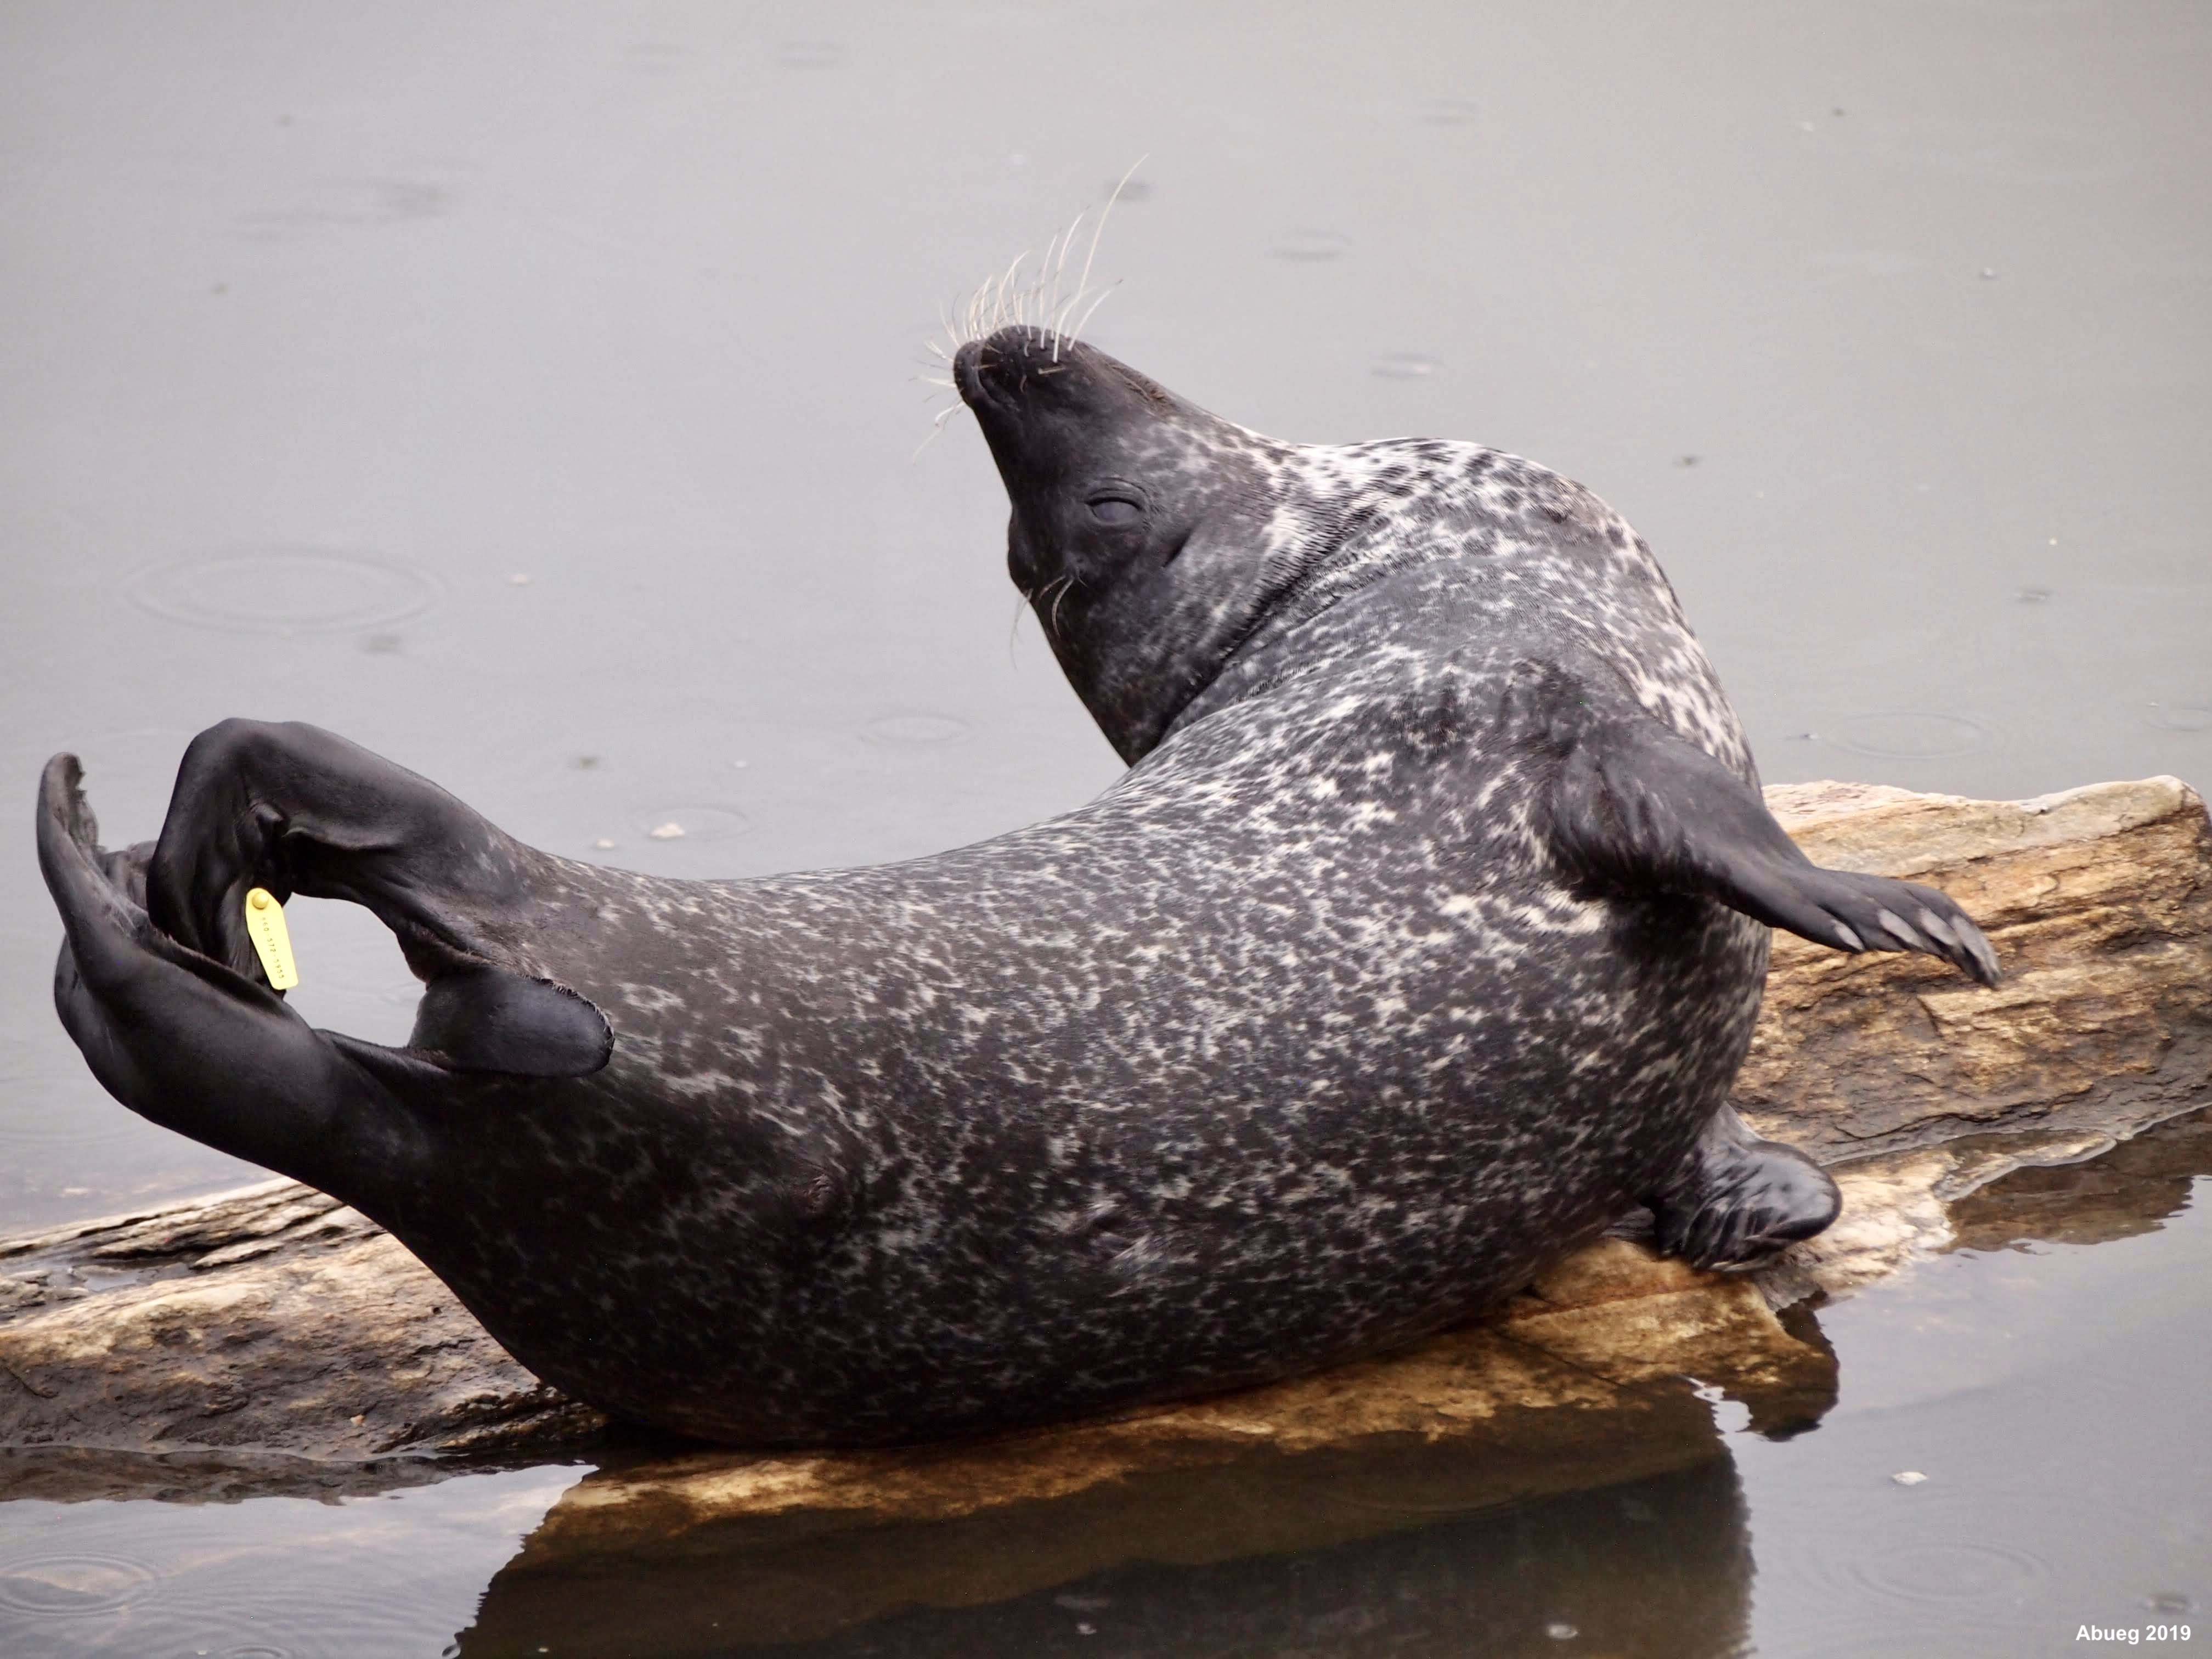 Harbor seal